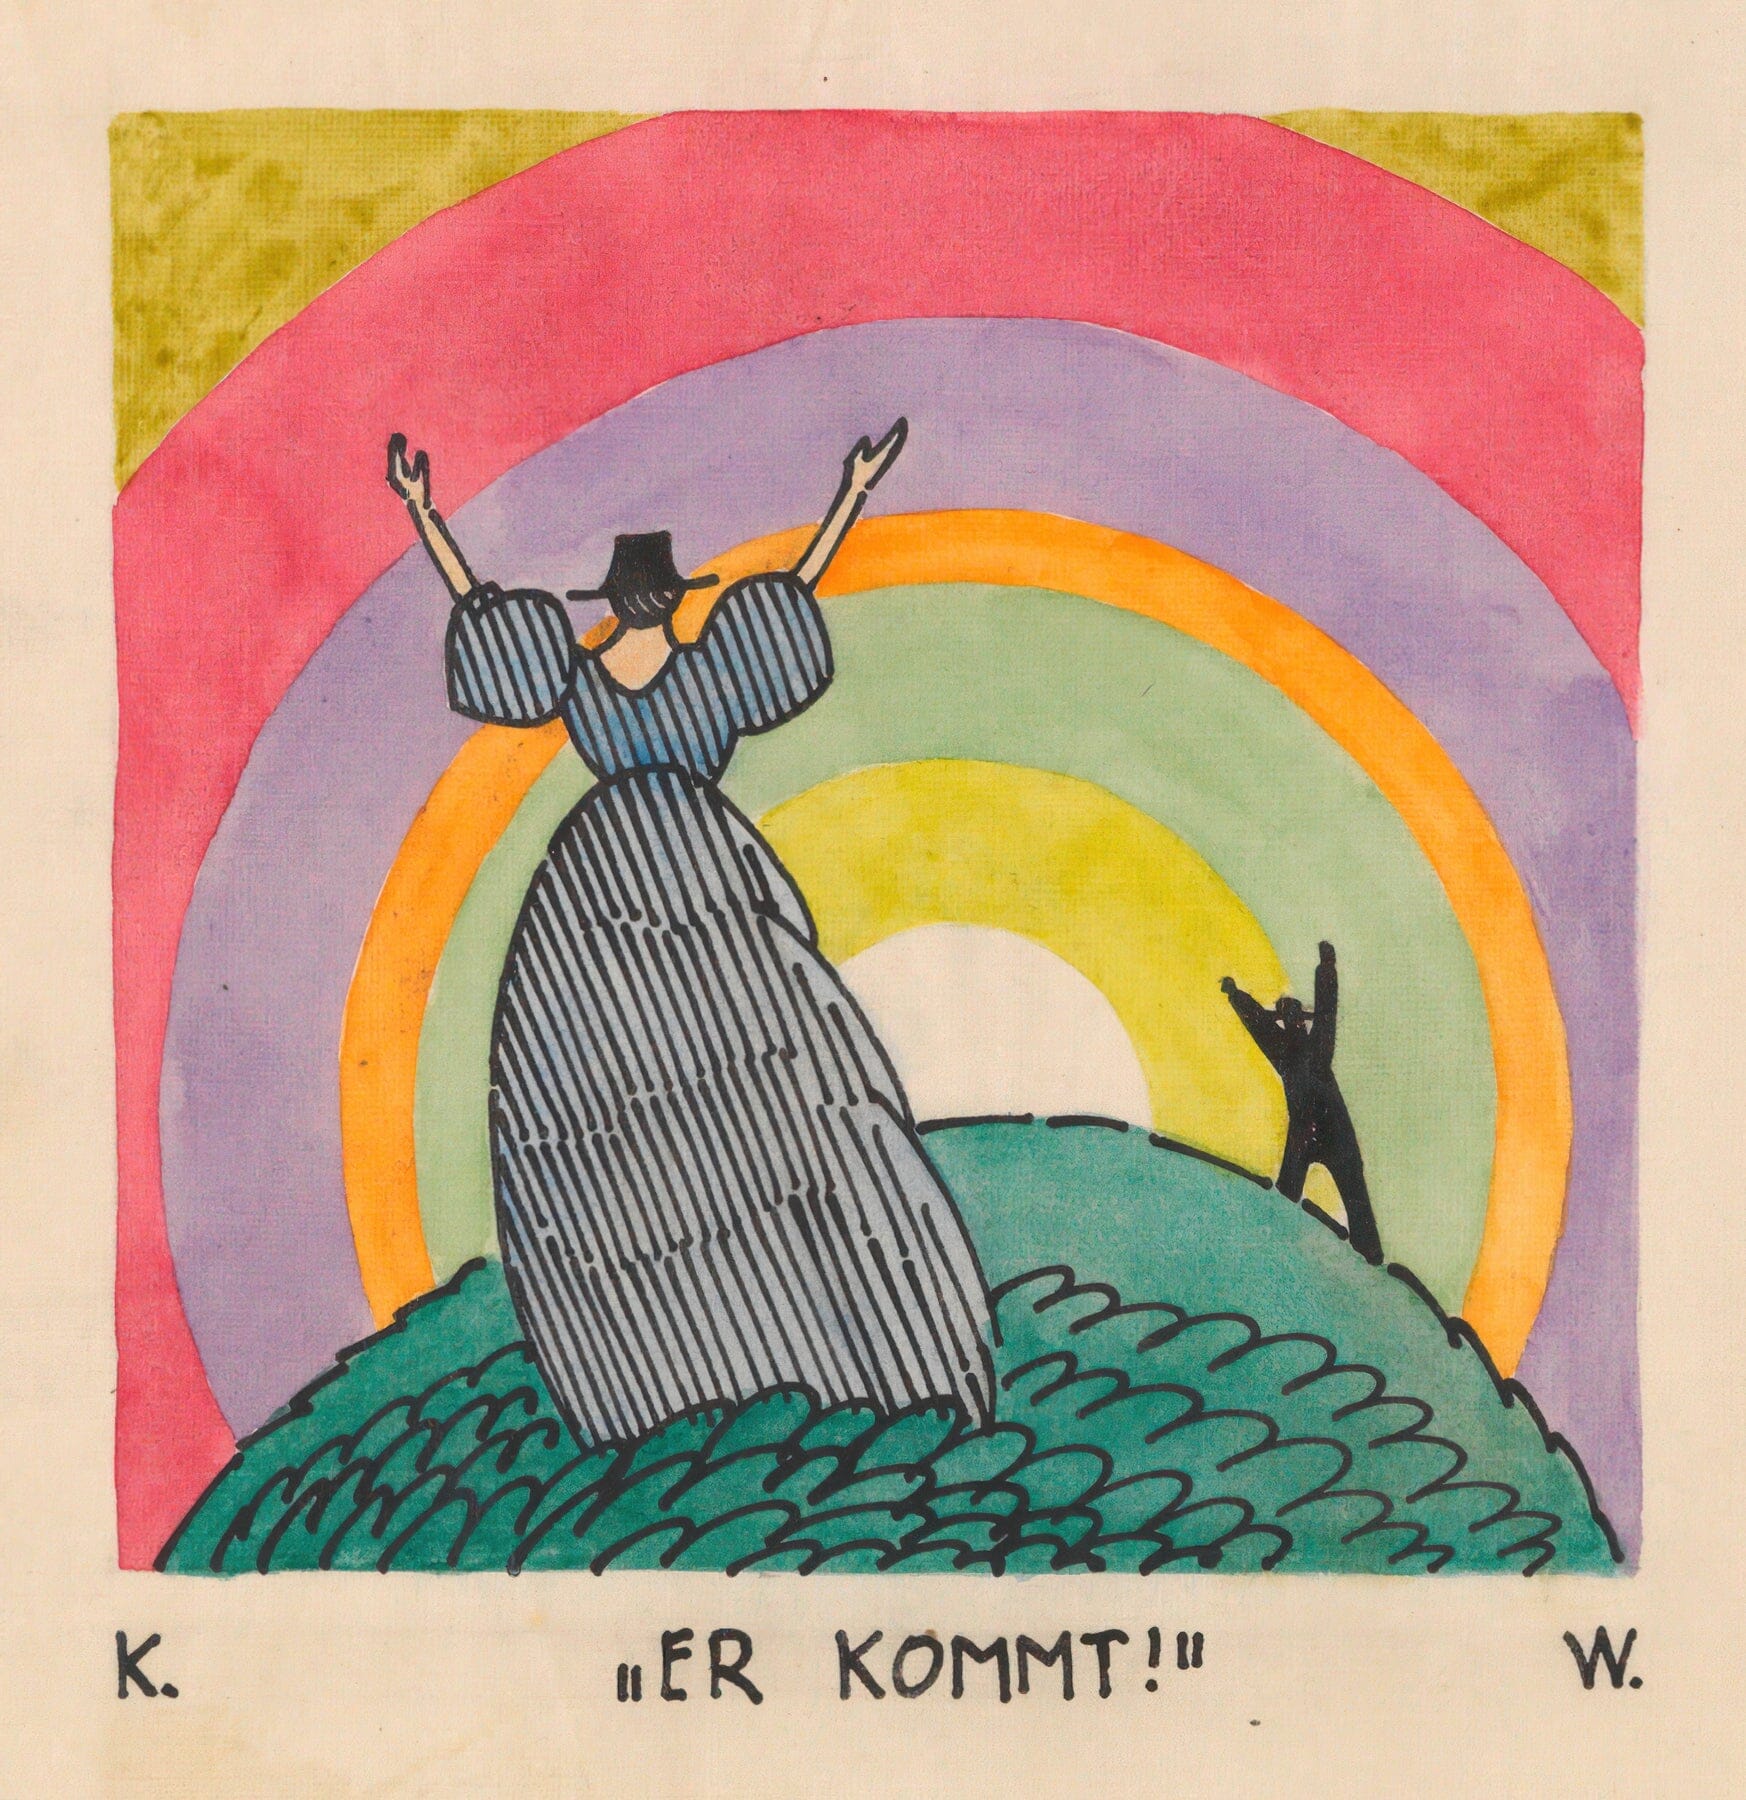 "Er kommt!" (He comes!) (1920s) | Karl Wiener Posters, Prints, & Visual Artwork The Trumpet Shop Vintage Prints   